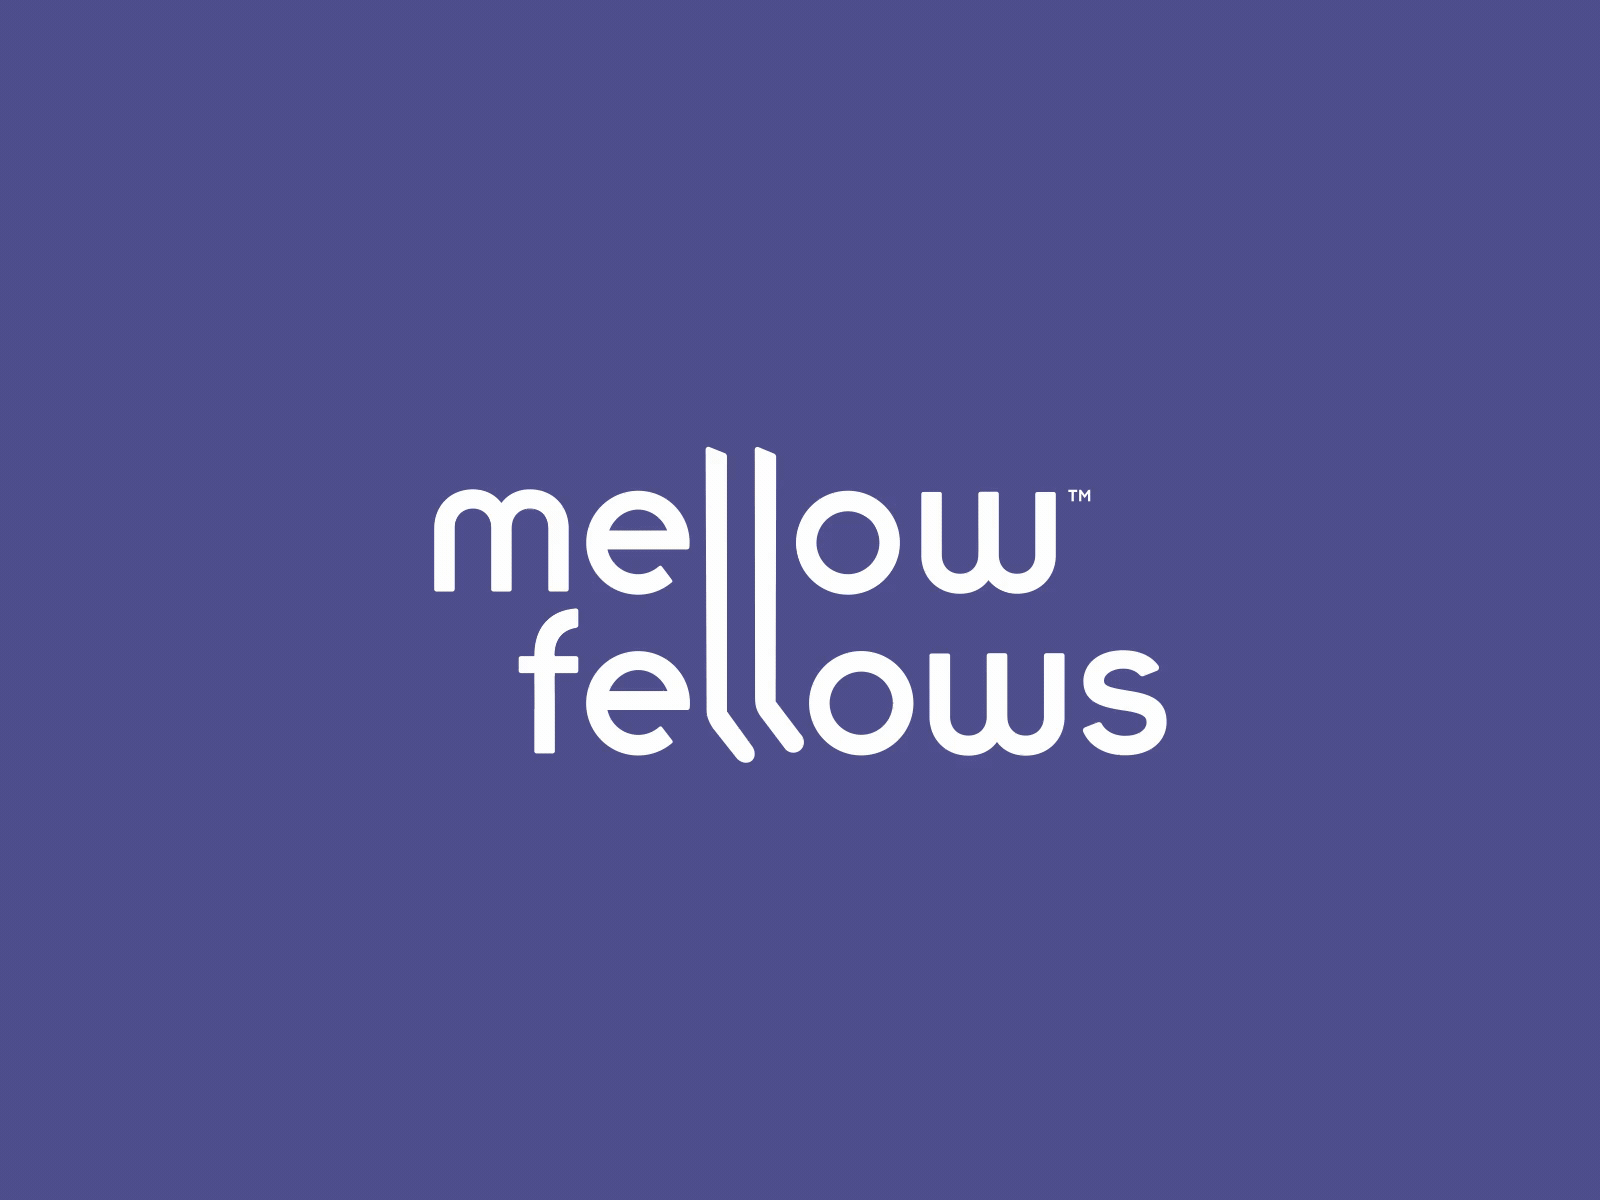 Mellow Fellows - Logo Animation animated logo animation brand animation branding logo logo animation mellow motion graphics run running cycle socks